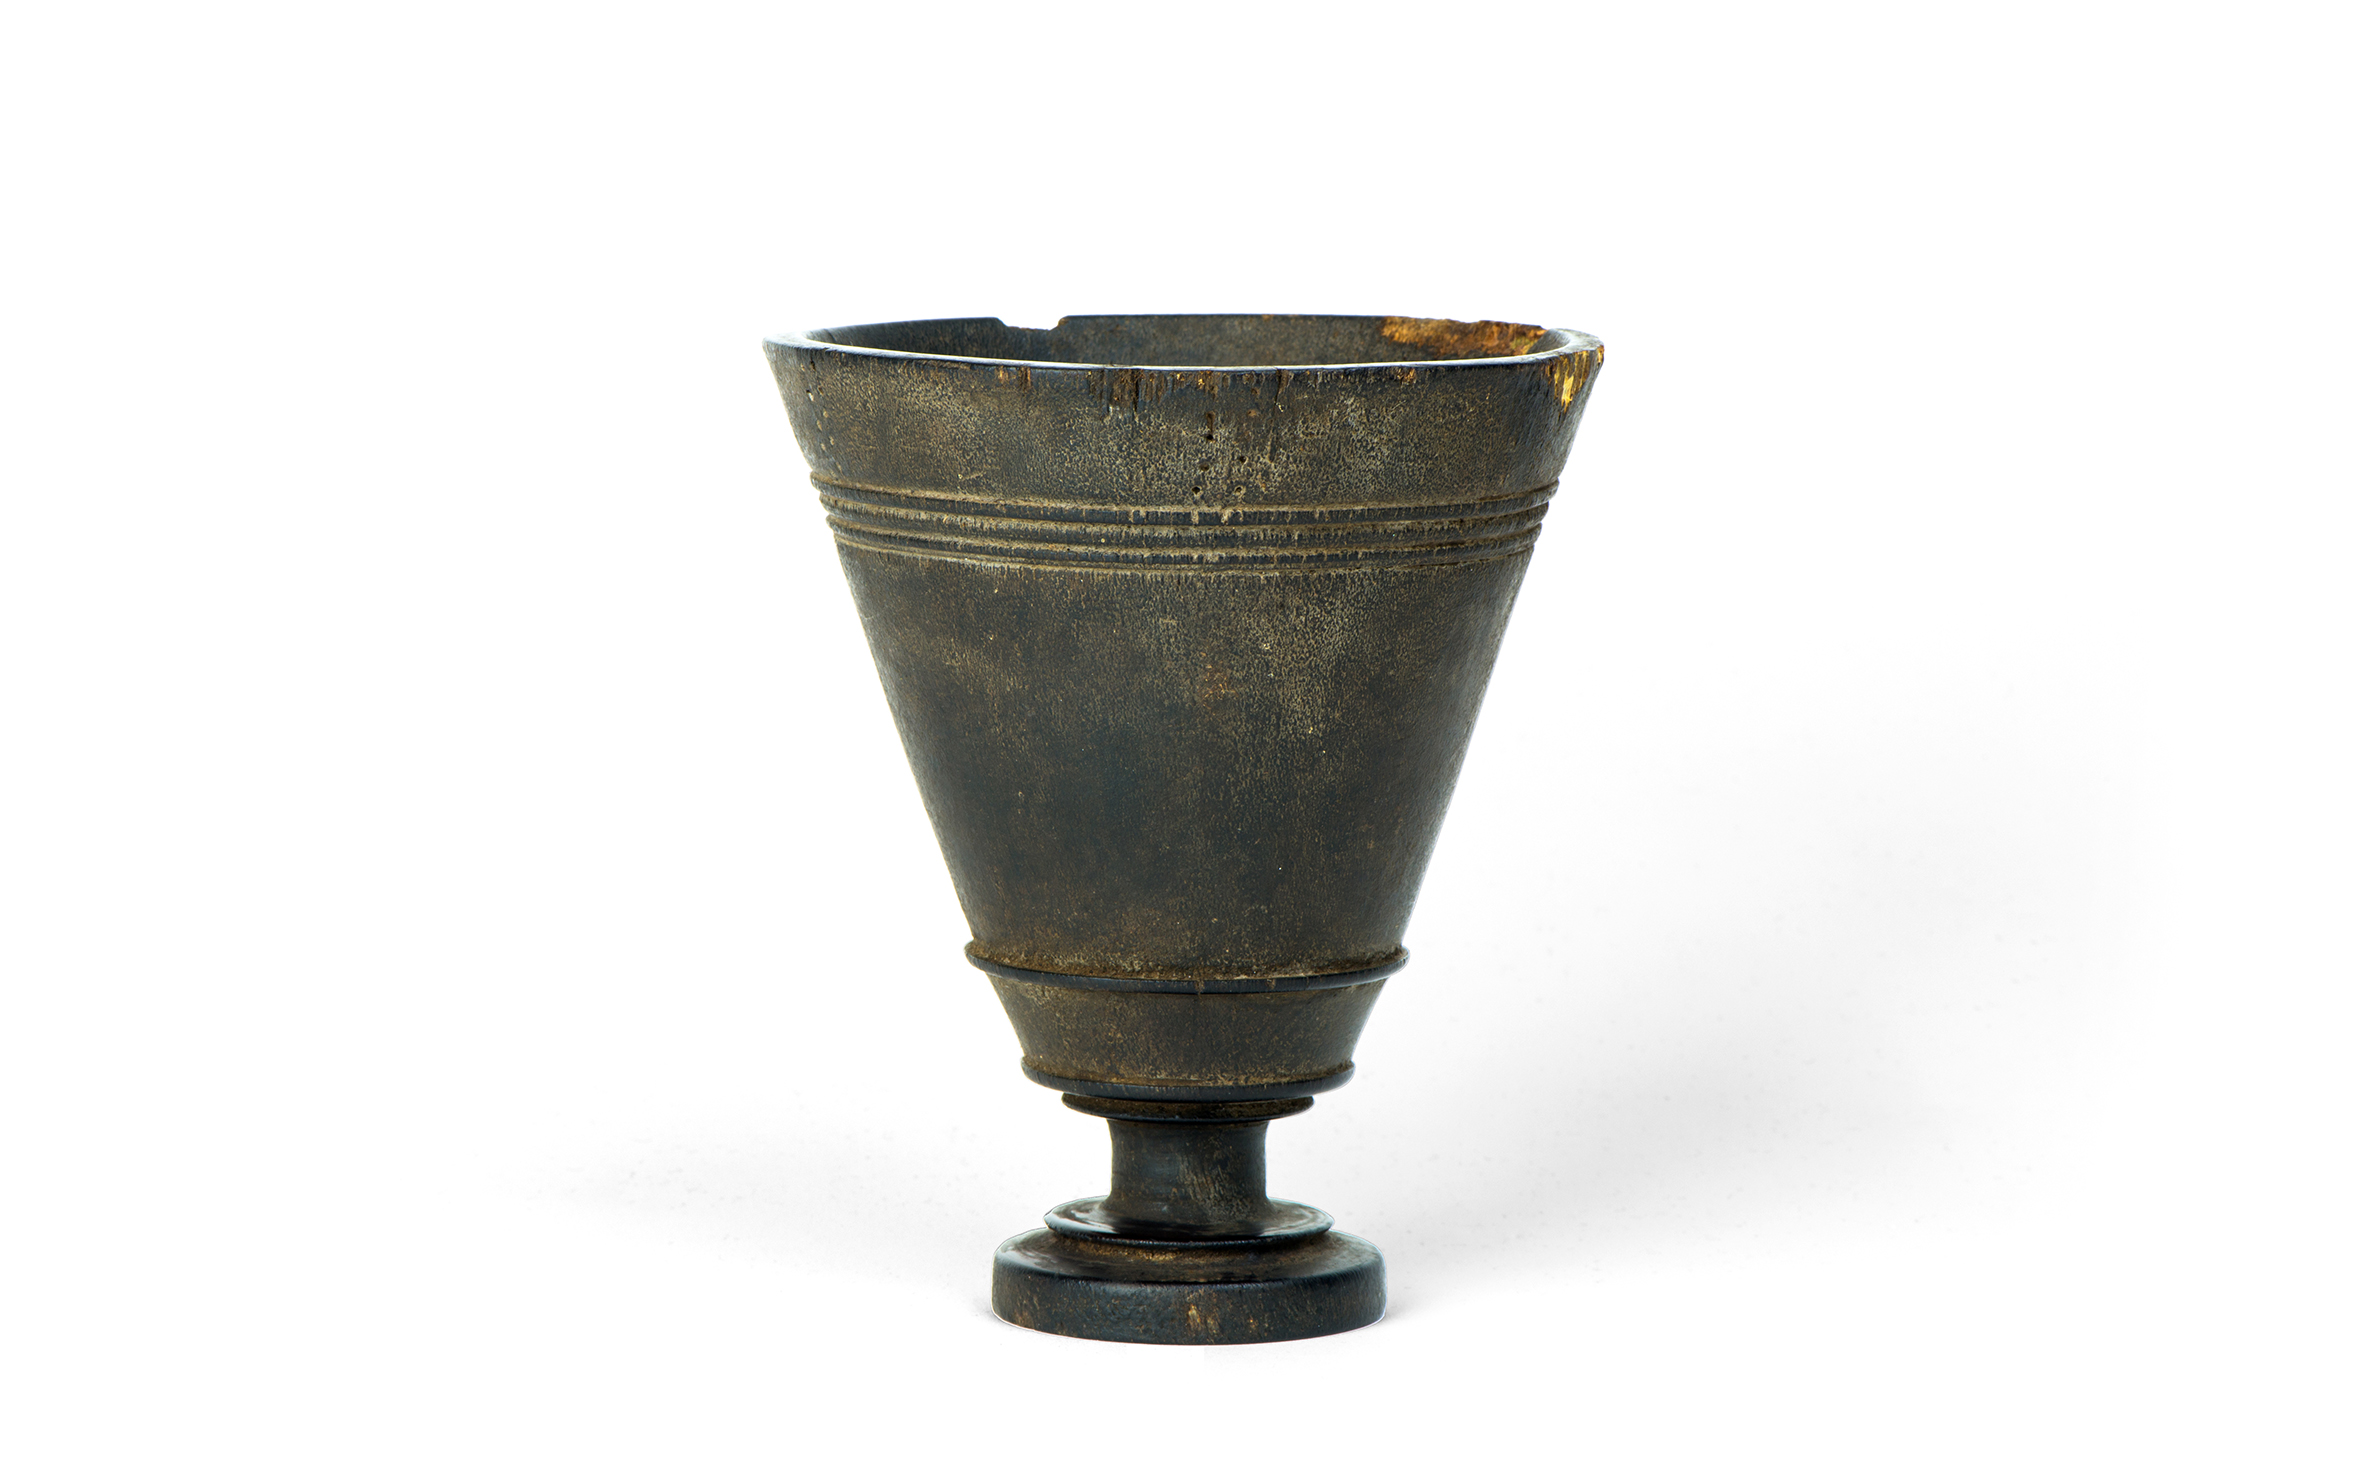 An ethiopian cup in rhino horn